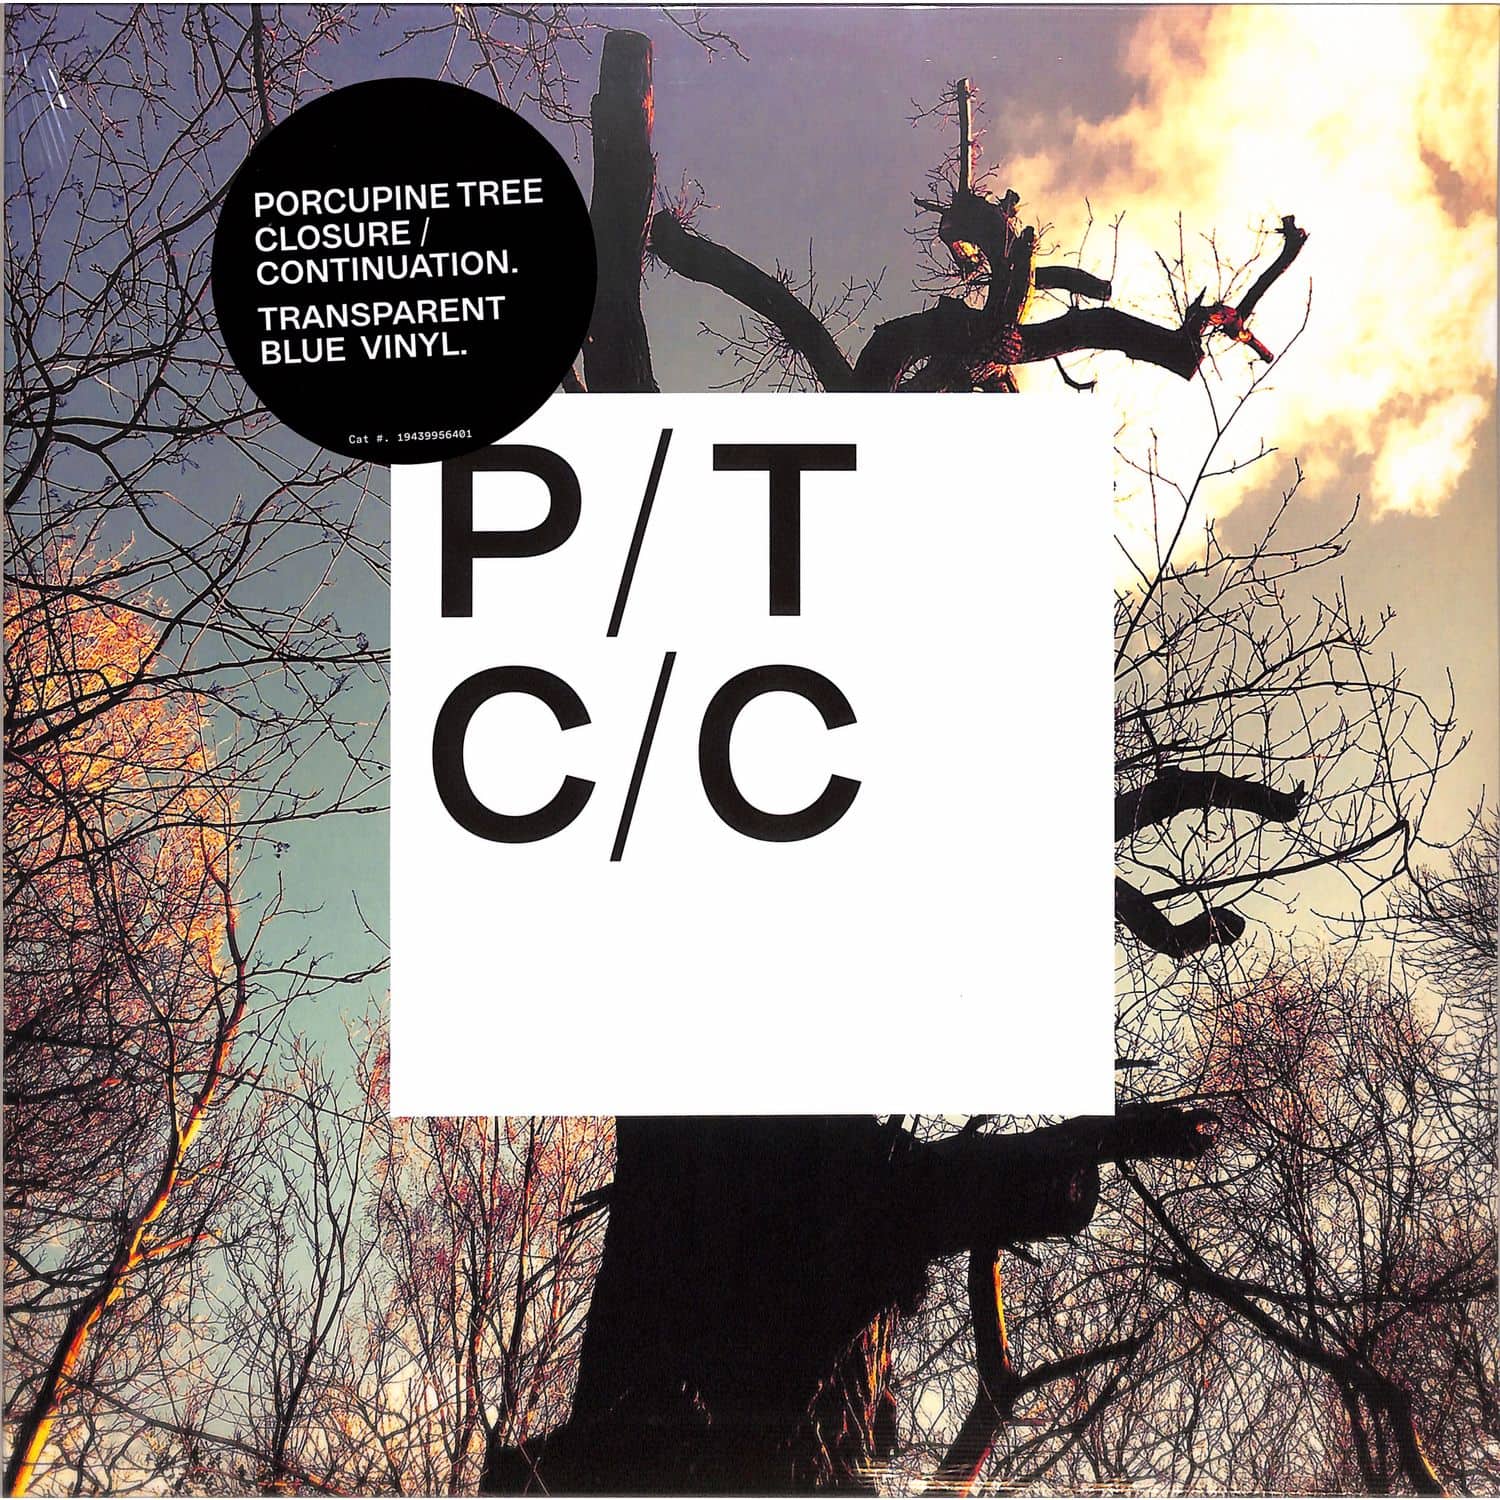 Porcupine Tree - CLOSURE / CONTINUATION 